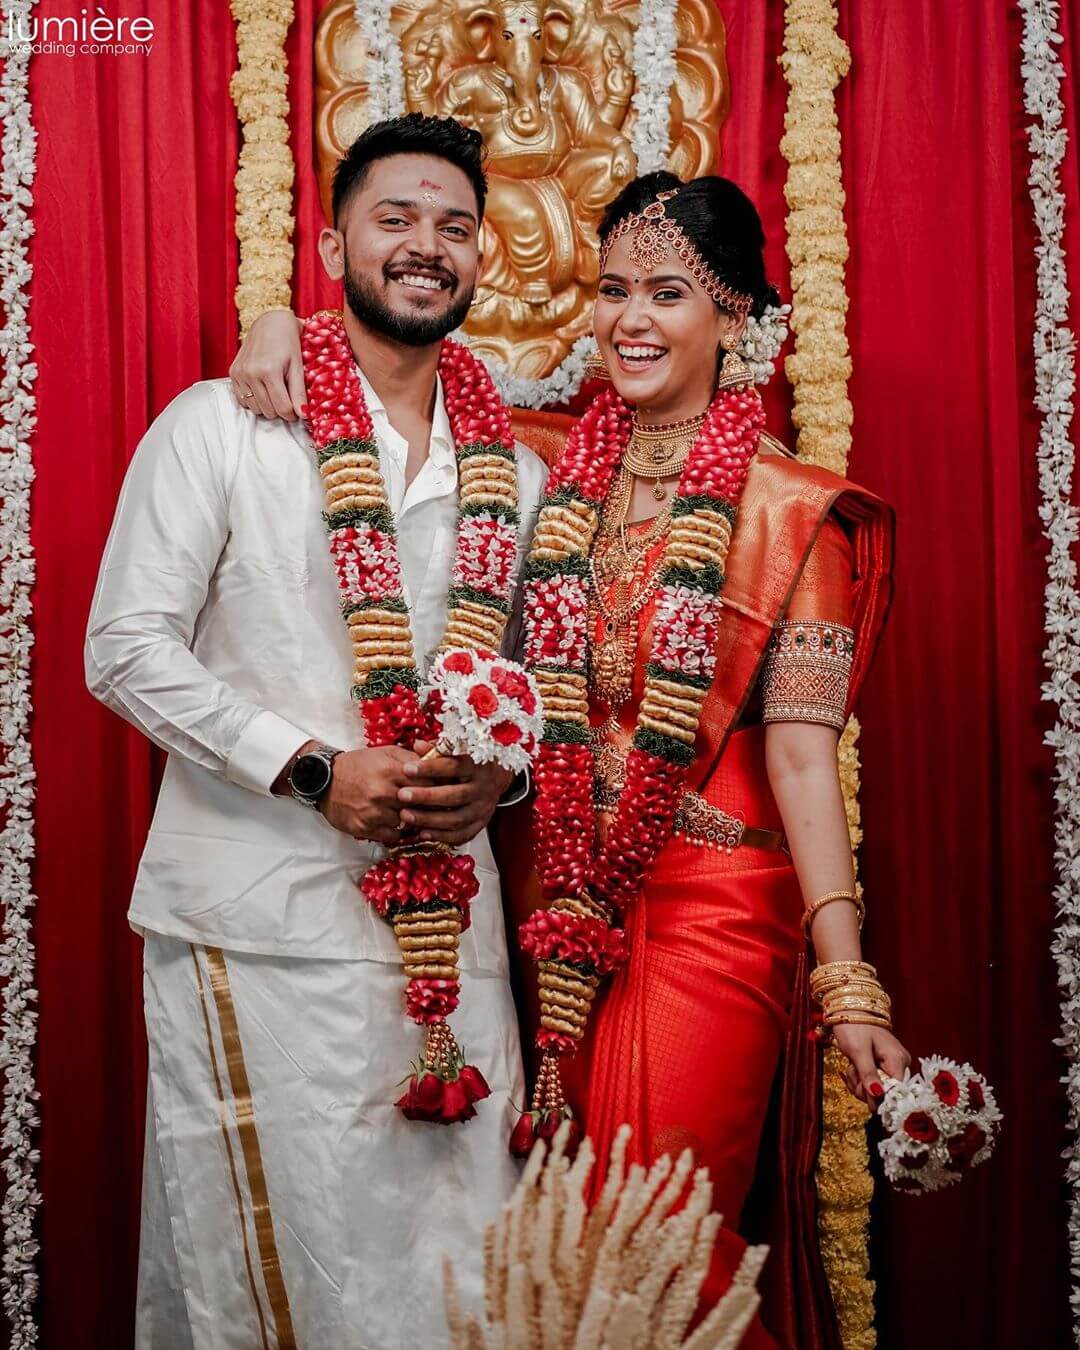 South Indian wedding garlands